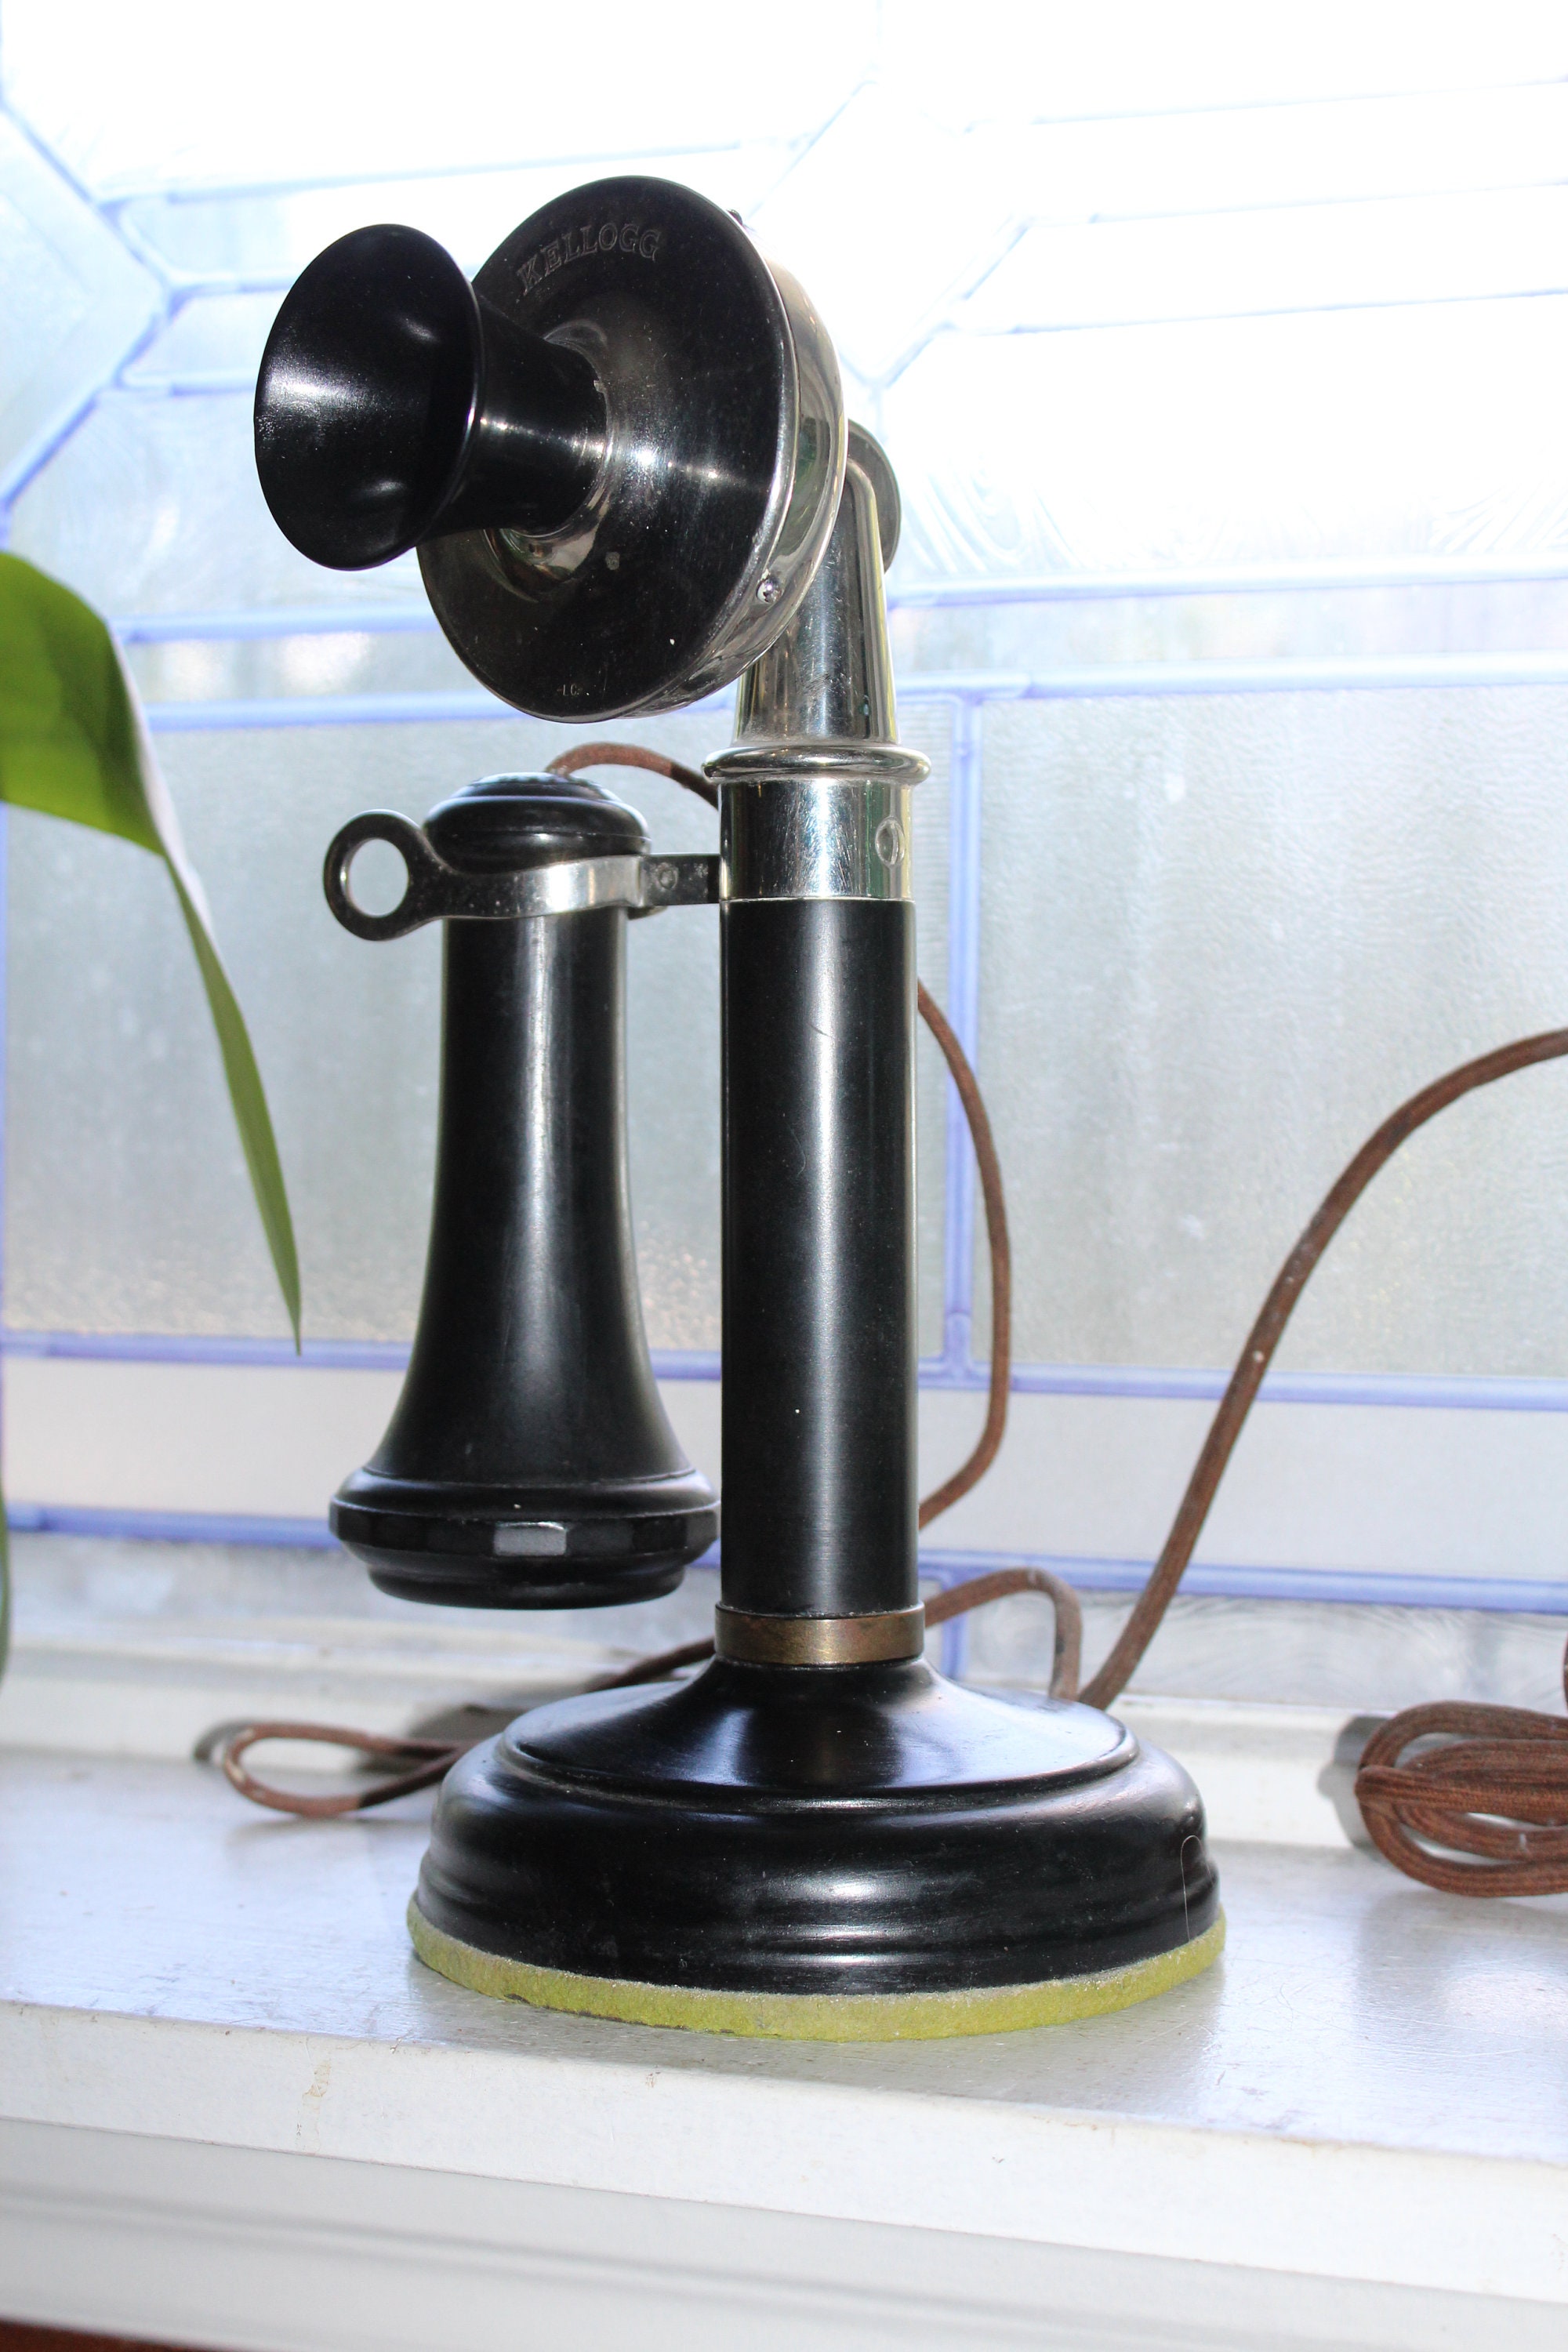 Antique Candlestick Telephone Kellogg Black and Chrome Steampunk Decor